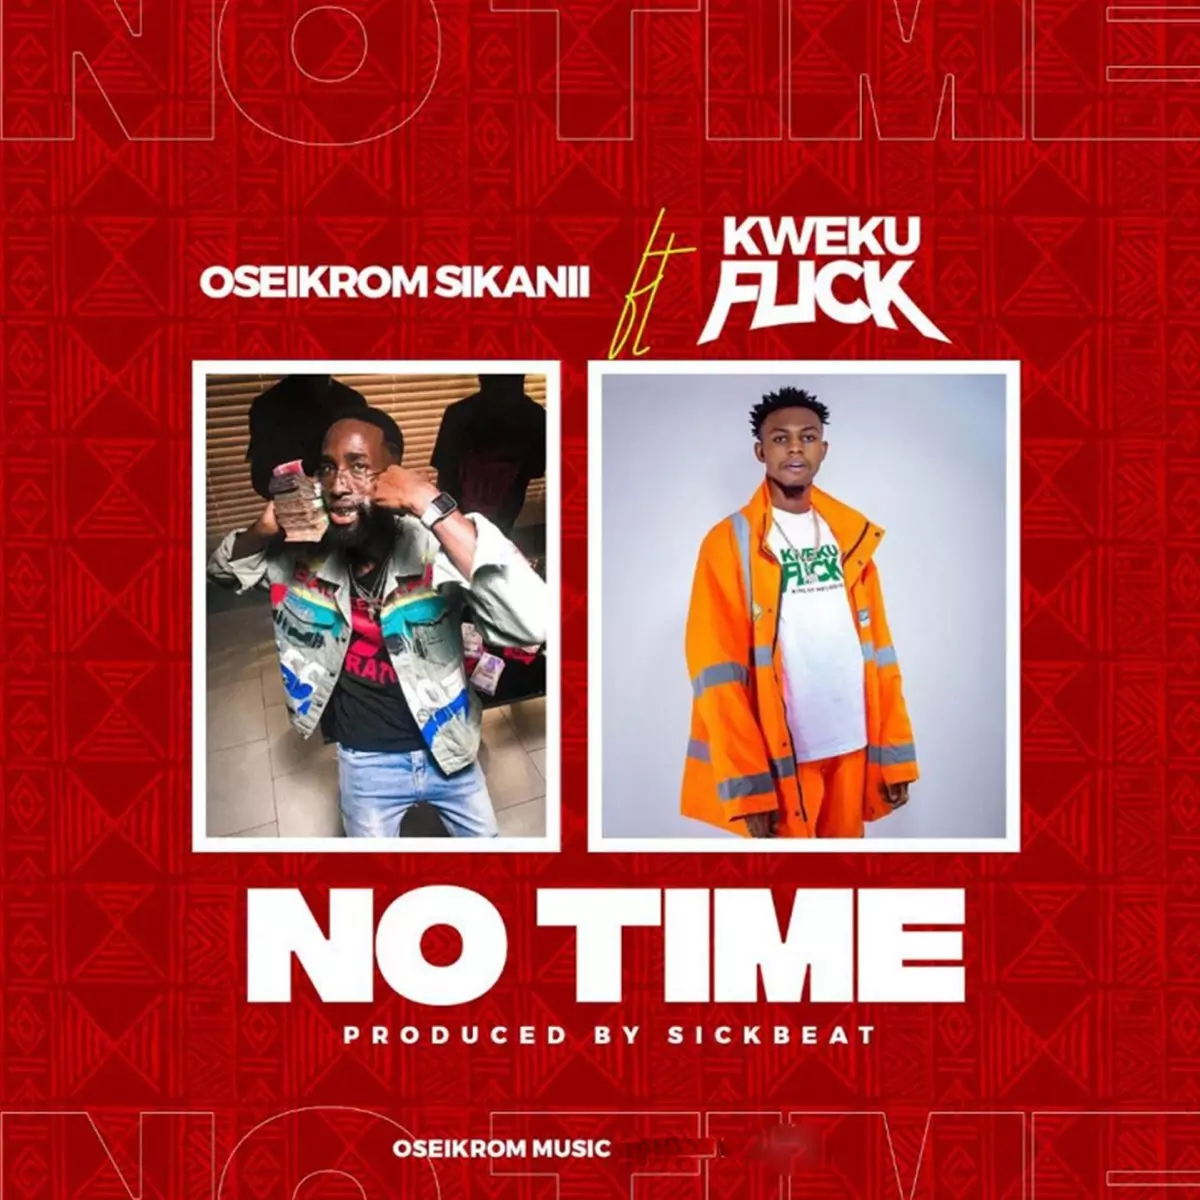 No Time (feat. Kweku Flick) - Single by Oseikrom Sikanii on Apple Music